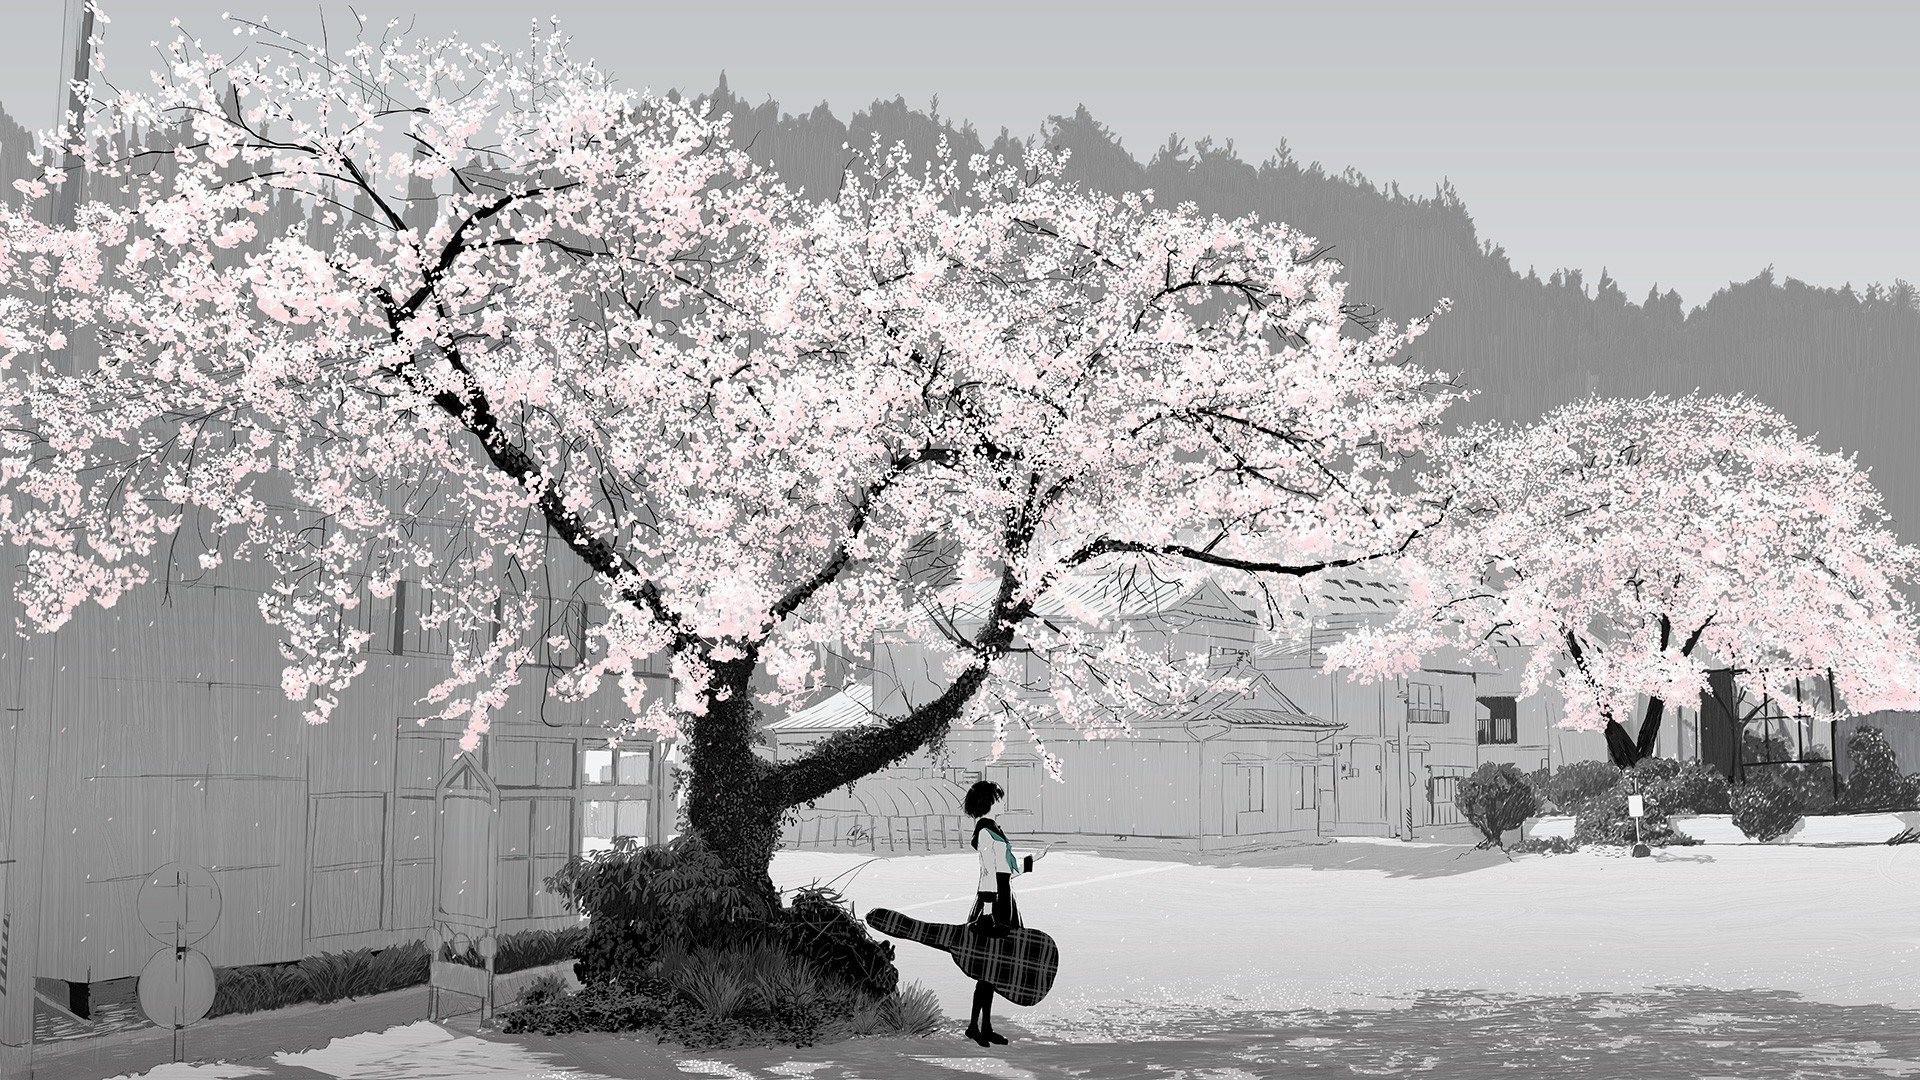 Cherry Blossom Desktop Wallpaper (80+ images)